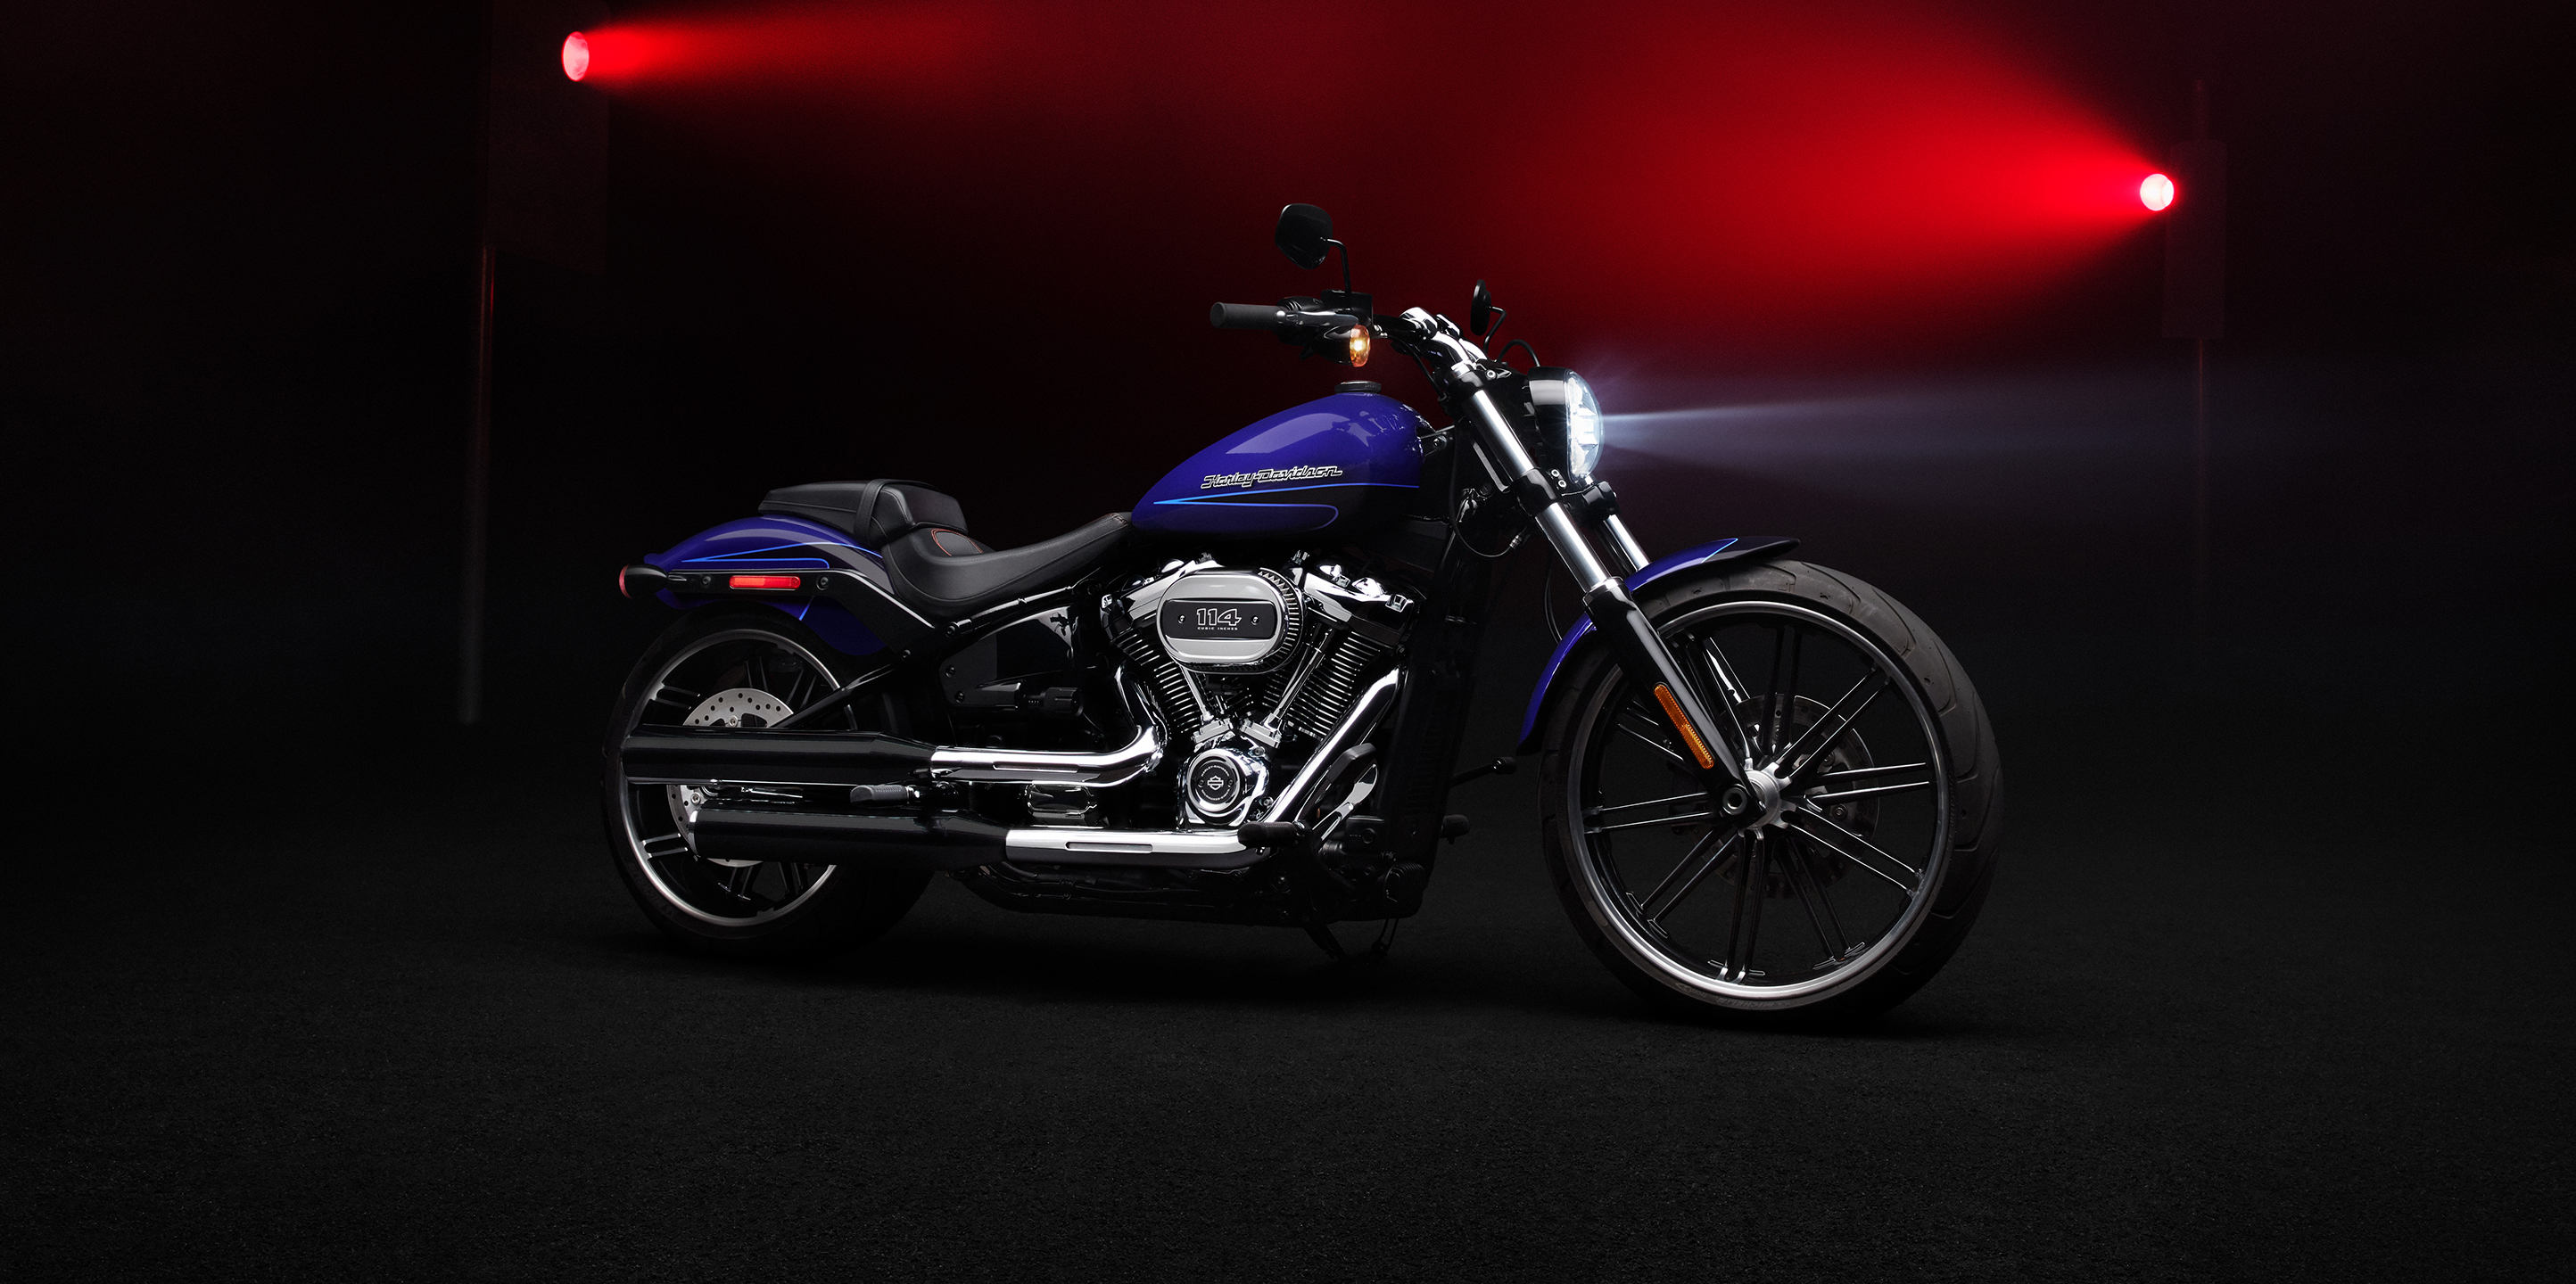  2020  Breakout  Motorcycle Harley  Davidson  USA